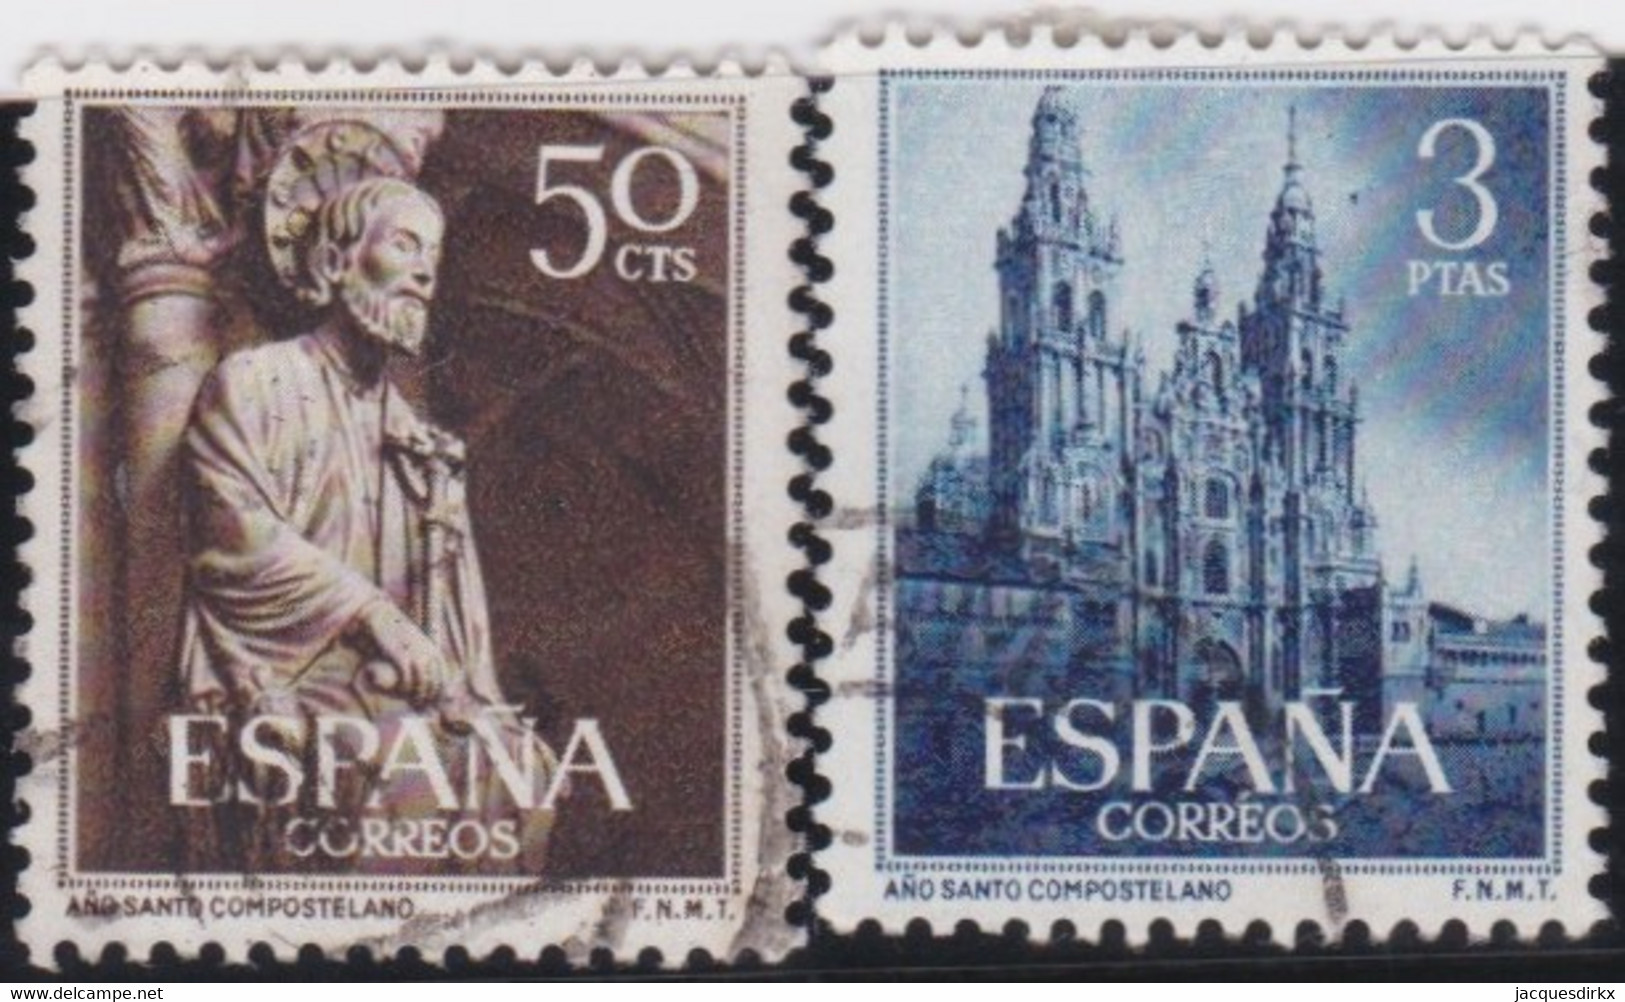 Espana     .    Y&T    .   841/842    .         O      .       Oblitéré   .   /   .     Cancelled - Oblitérés